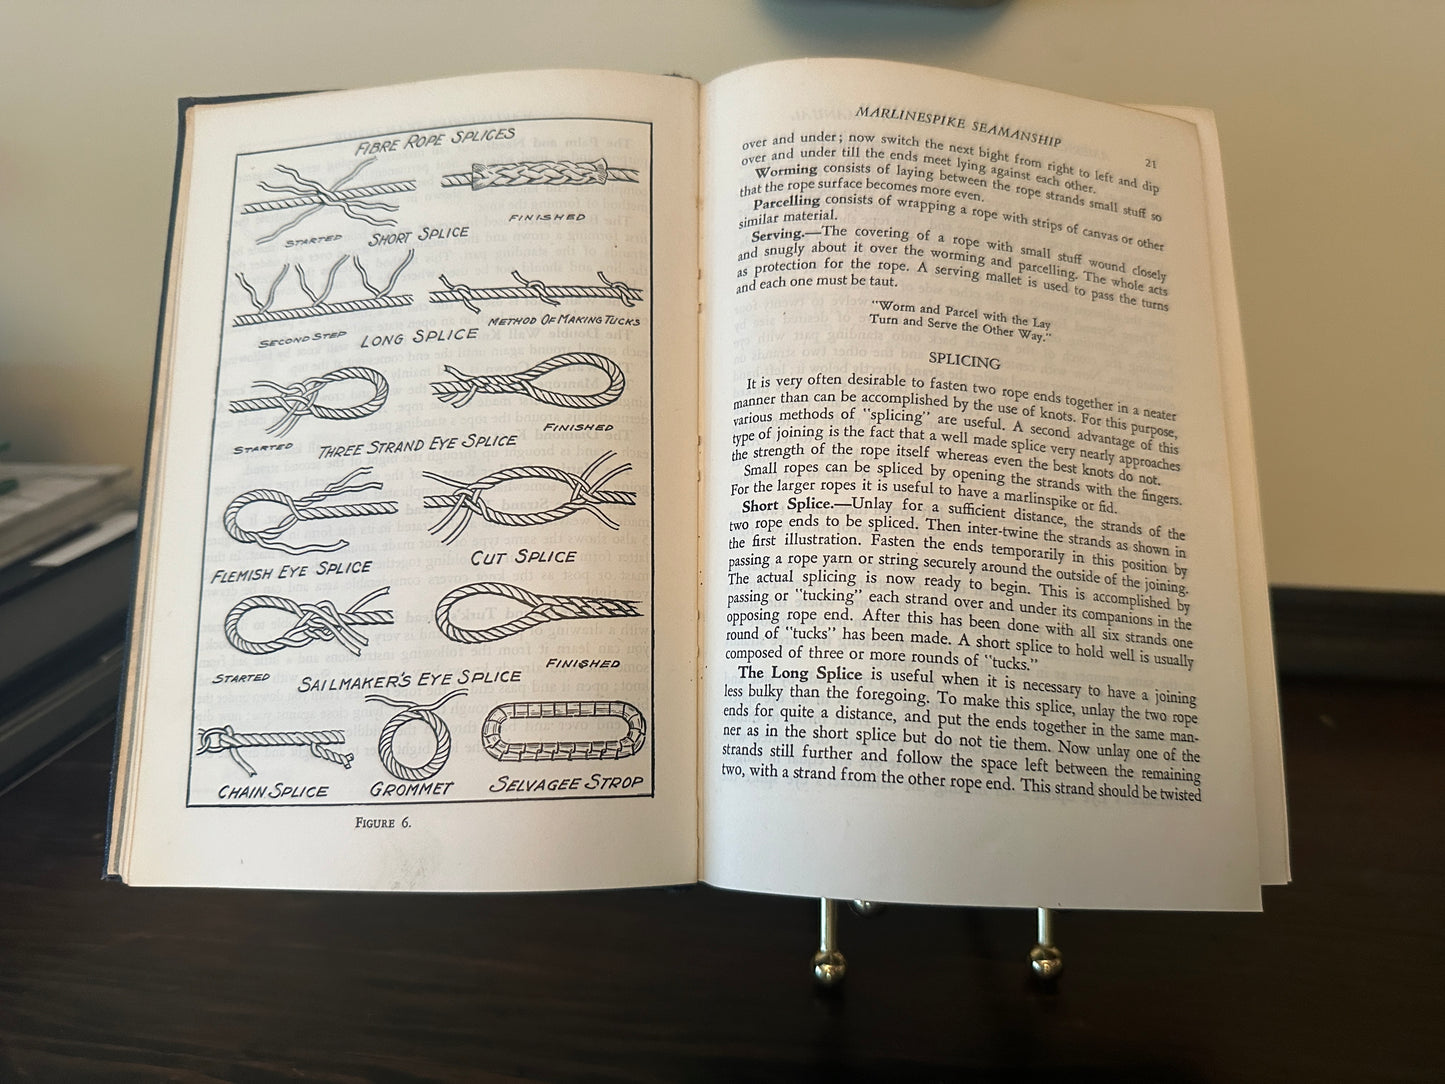 American Merchant Seaman's Manual - 1938